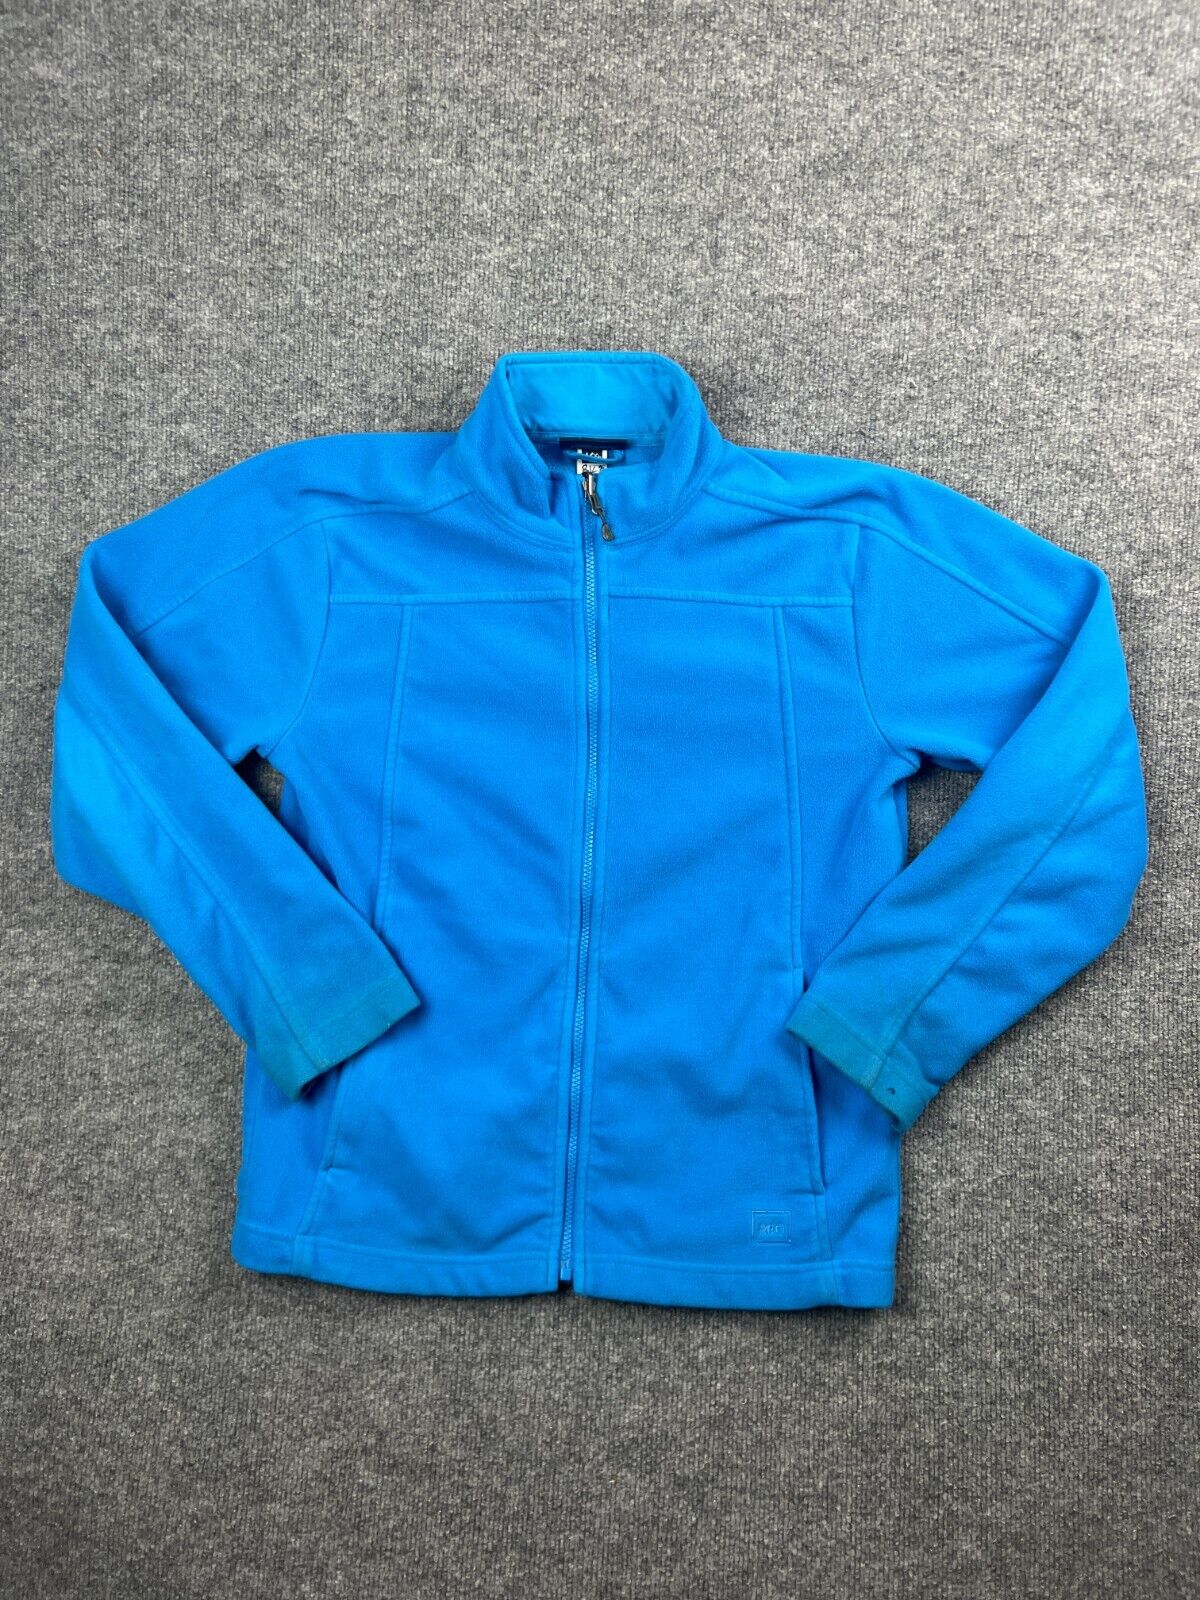 REI Fleece Jacket Youth Boys XL Blue Full Zip Pockets Outdoor Warm Camping  | eBay